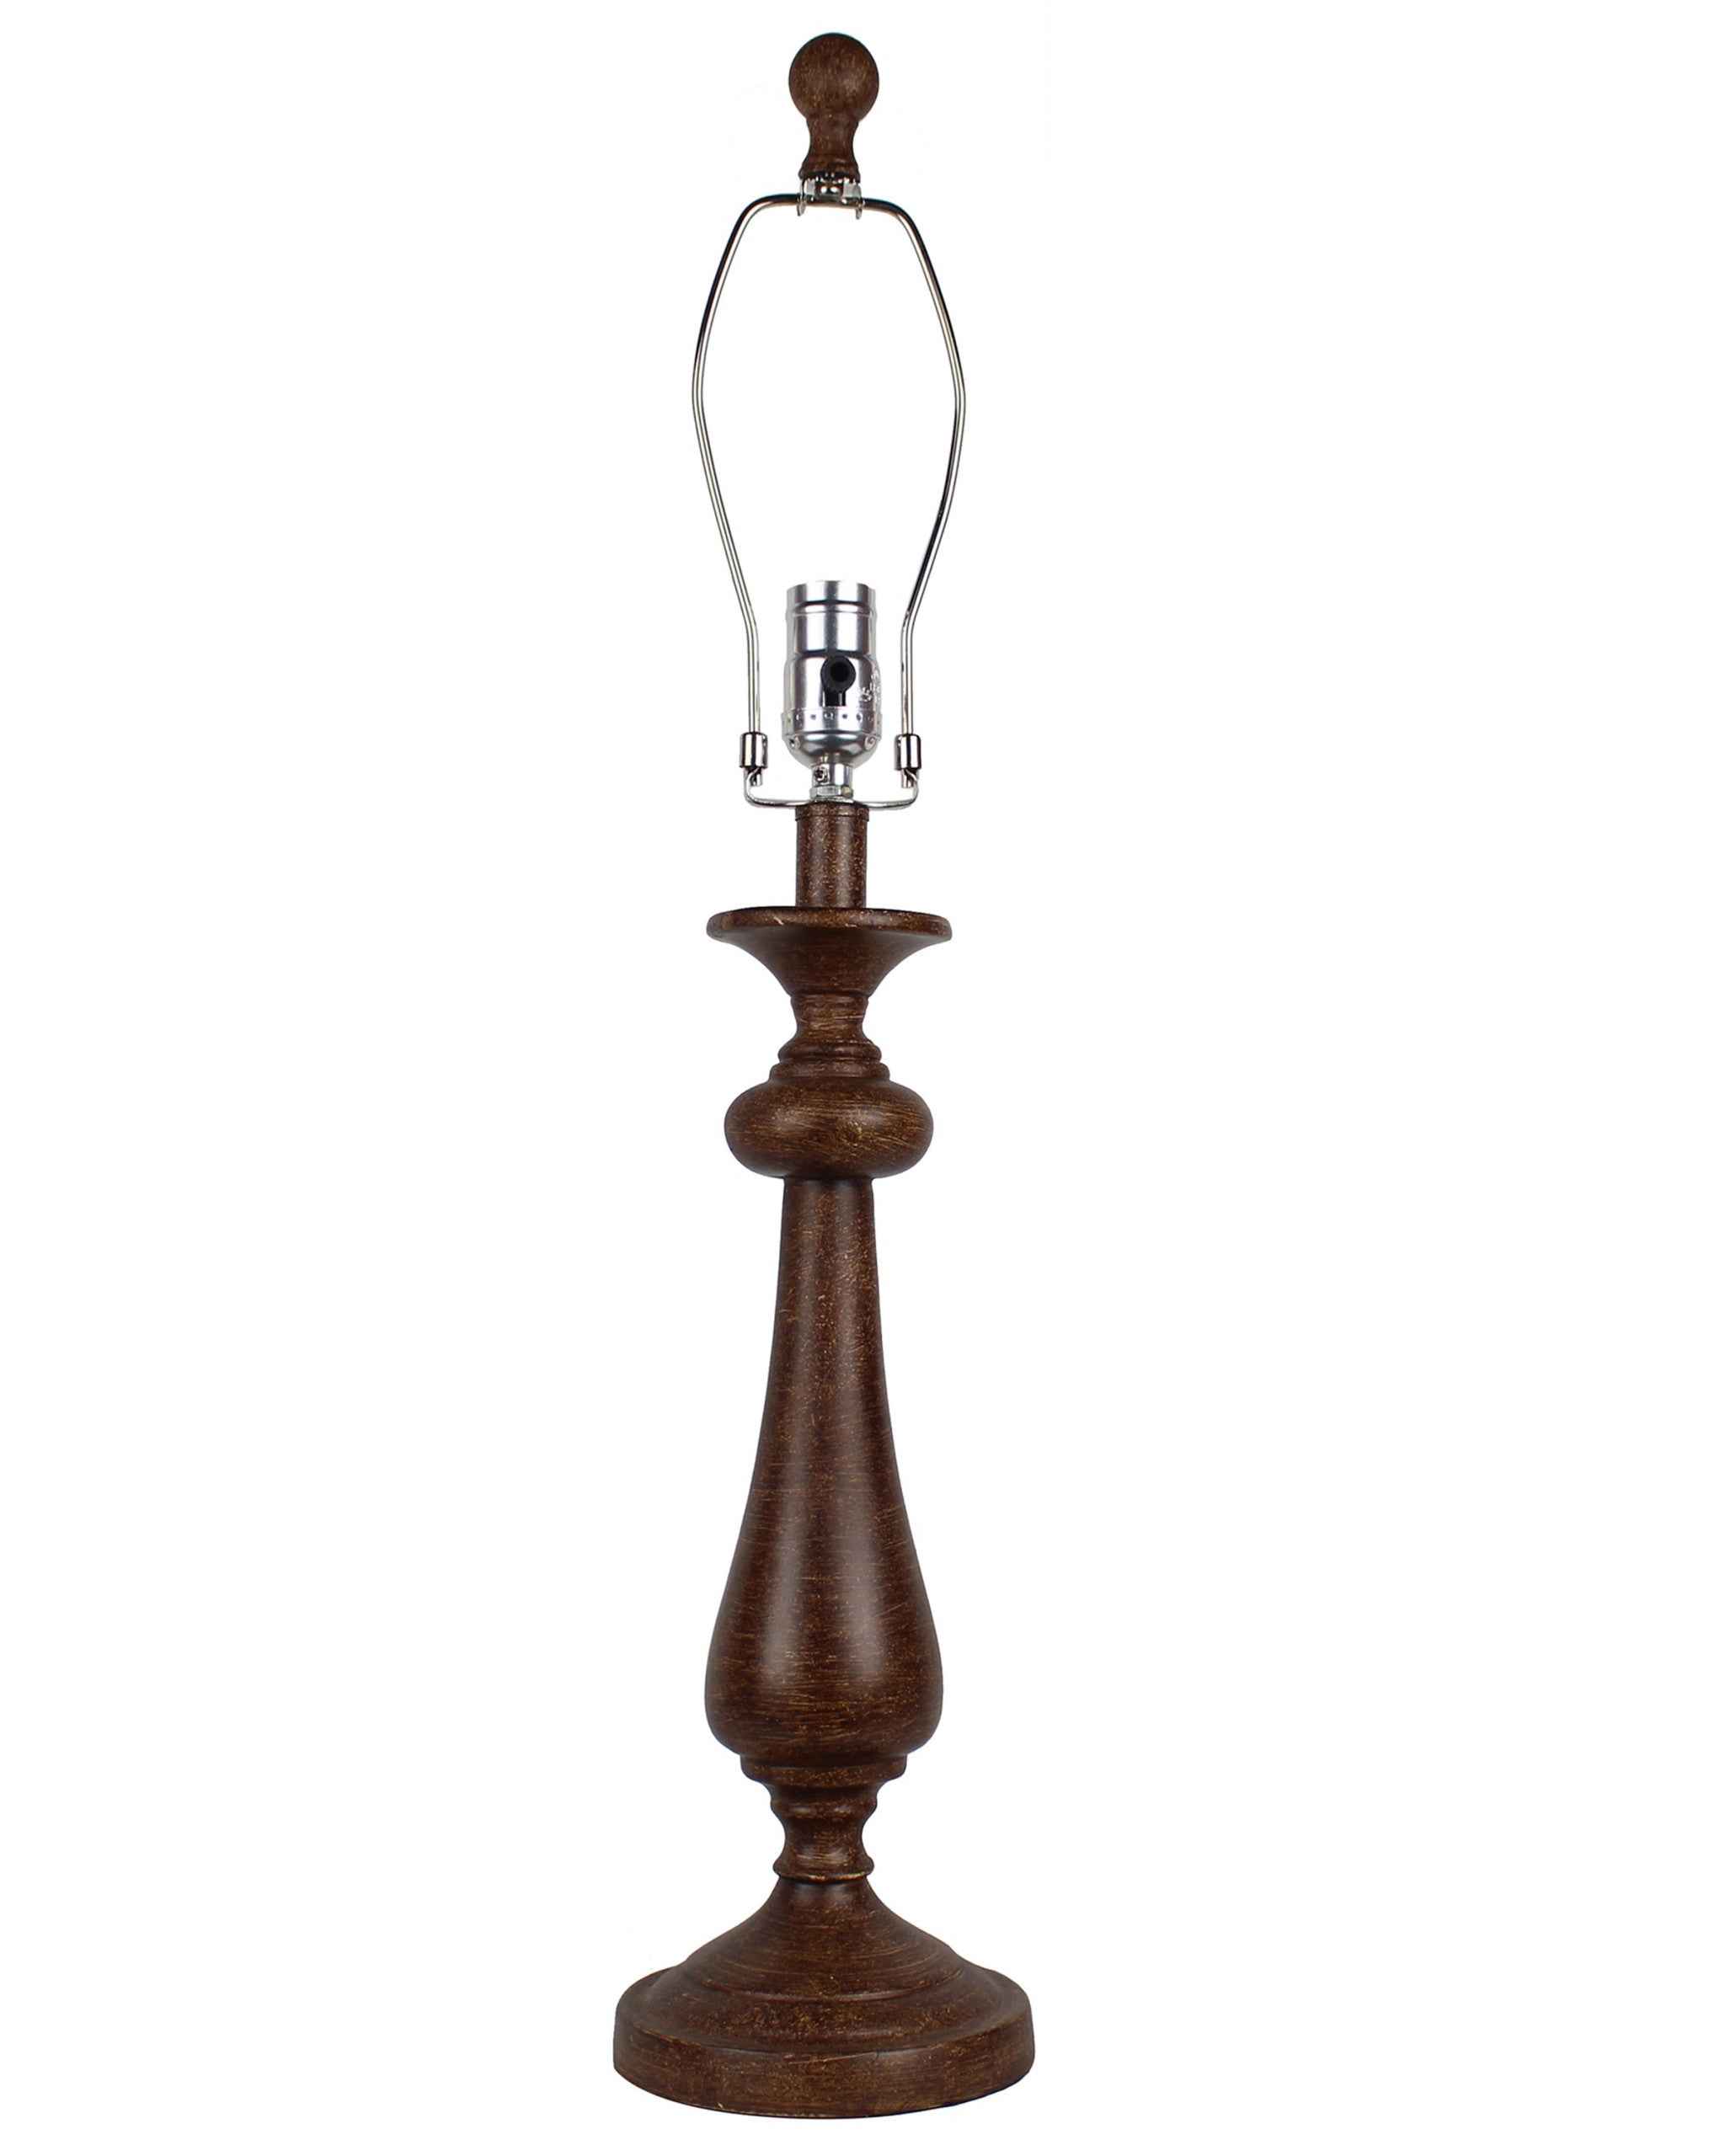 Brown Candlestick Modern Birds Shade Table Lamp